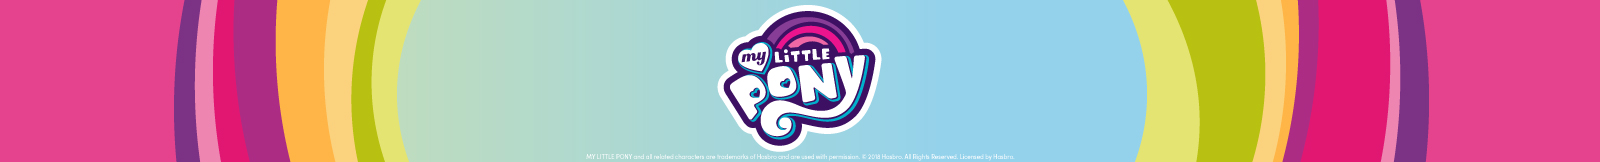 My Little Pony - mlp - My Little Pony stuffed animal